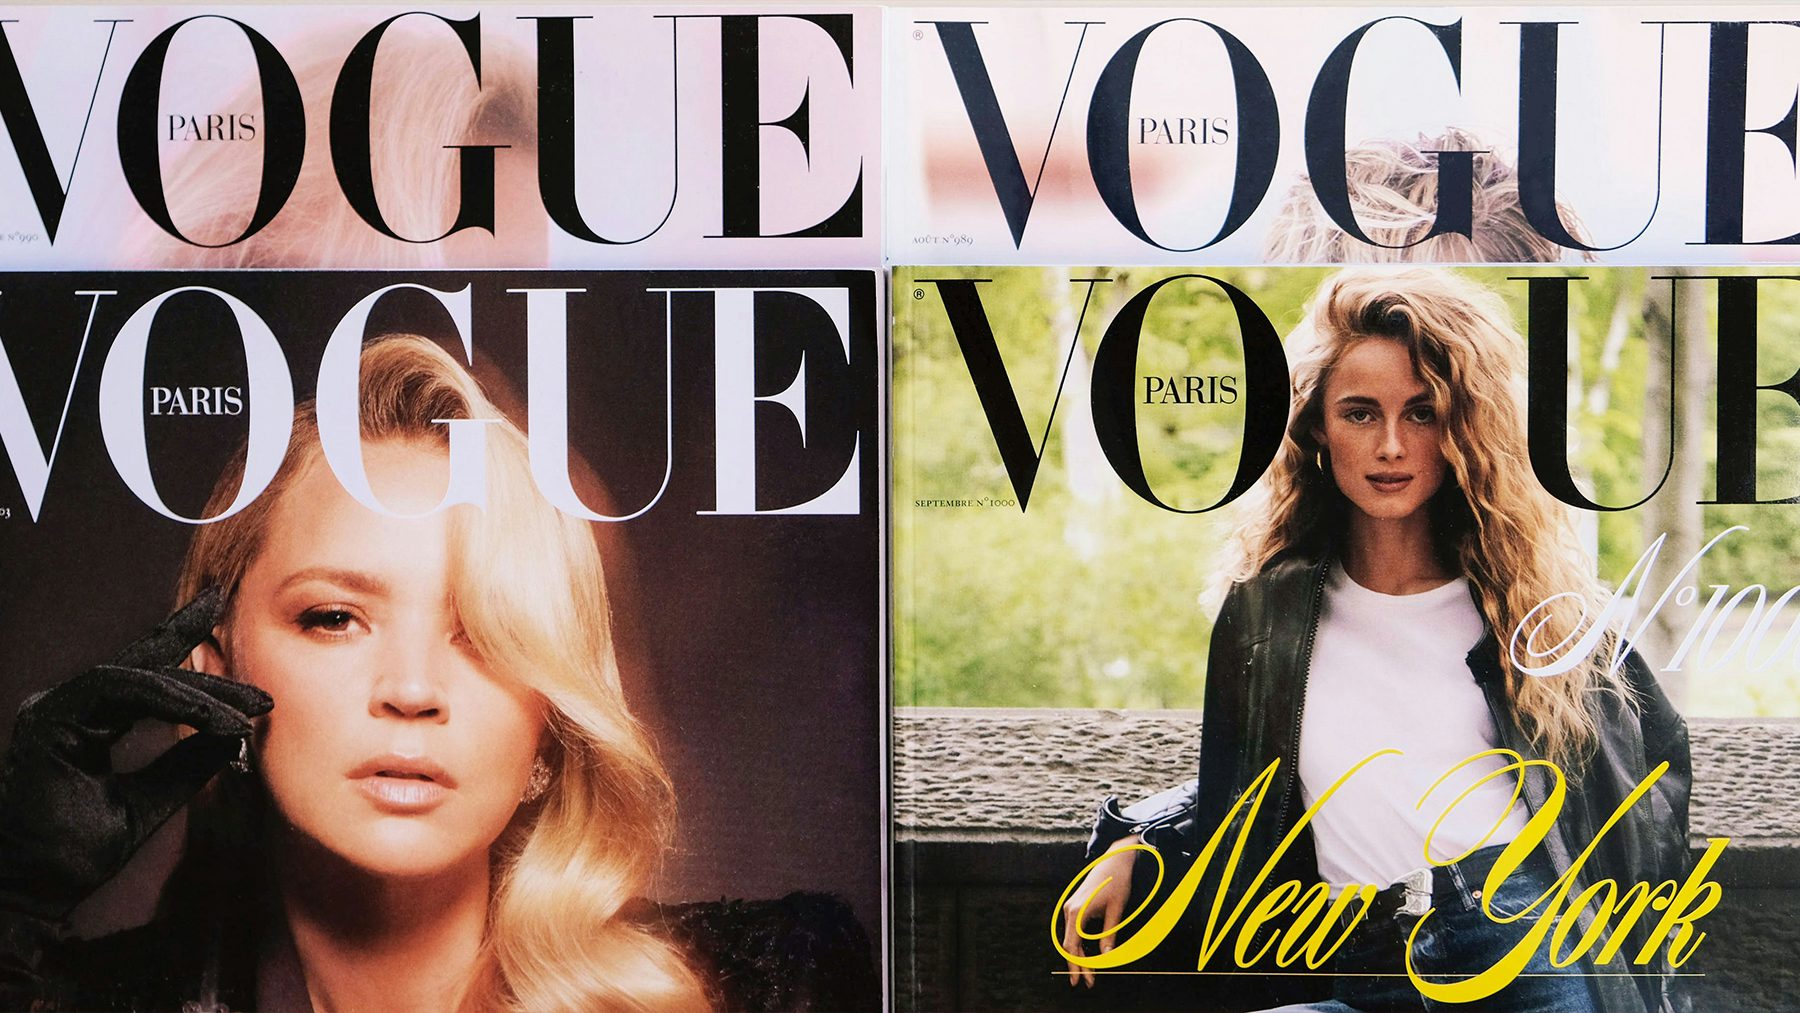 Condé Nast证实《Vogue》巴黎版更名。在上面。